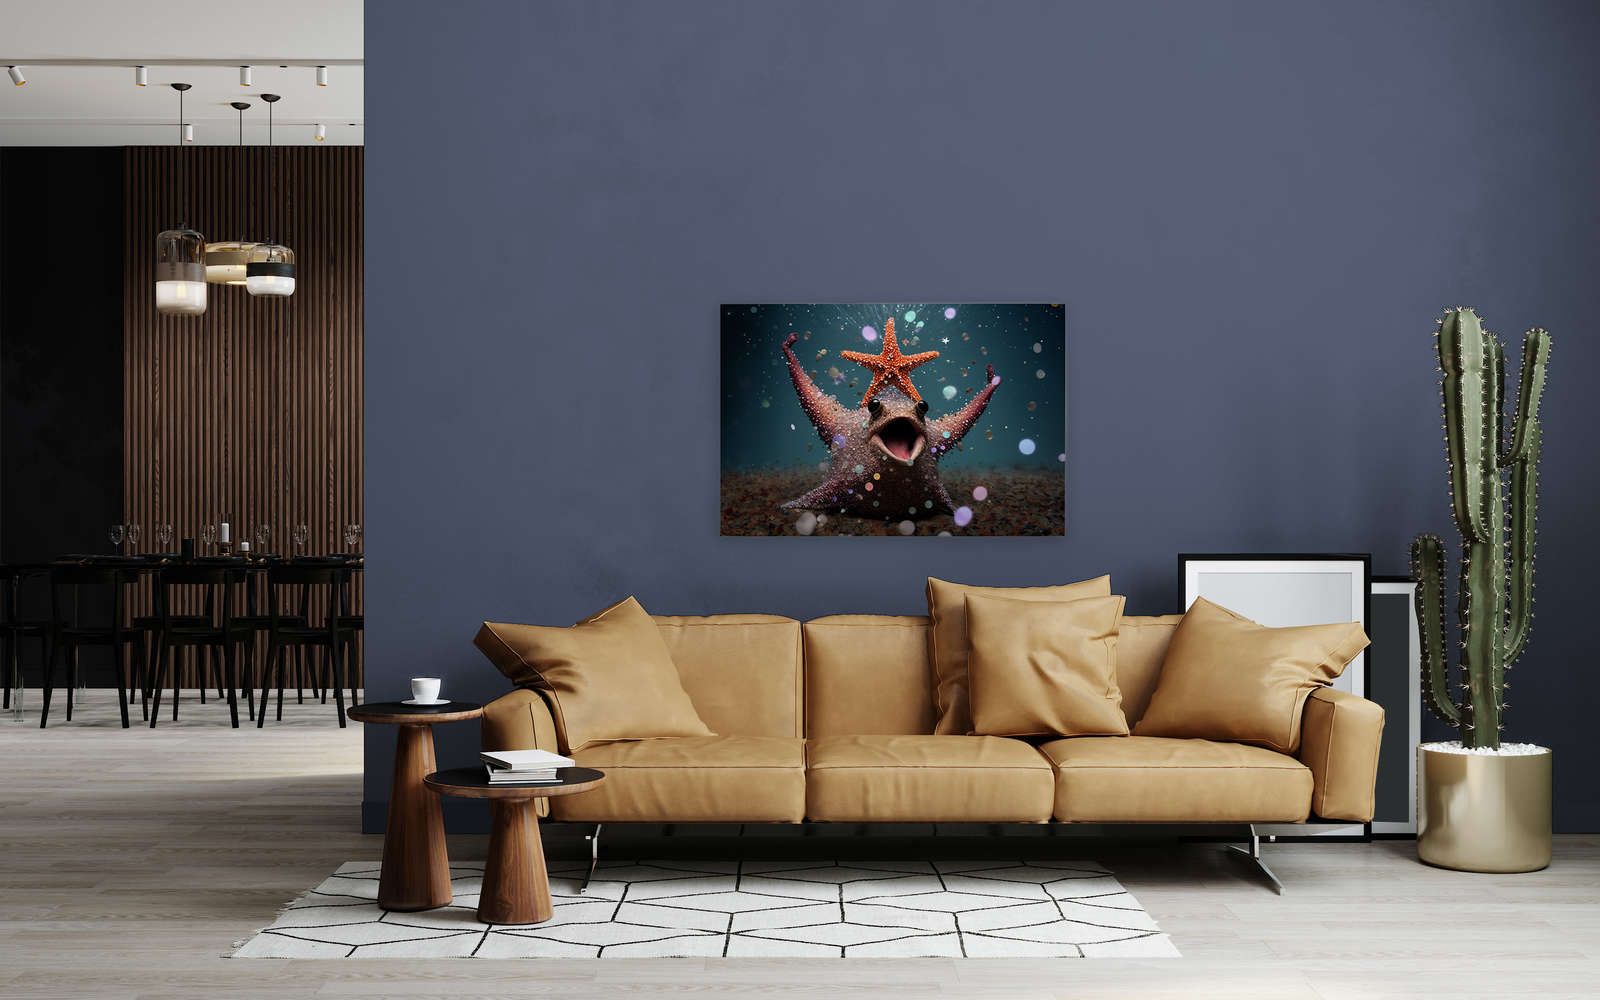             KI Canvas painting »party starfish« - 120 cm x 80 cm
        